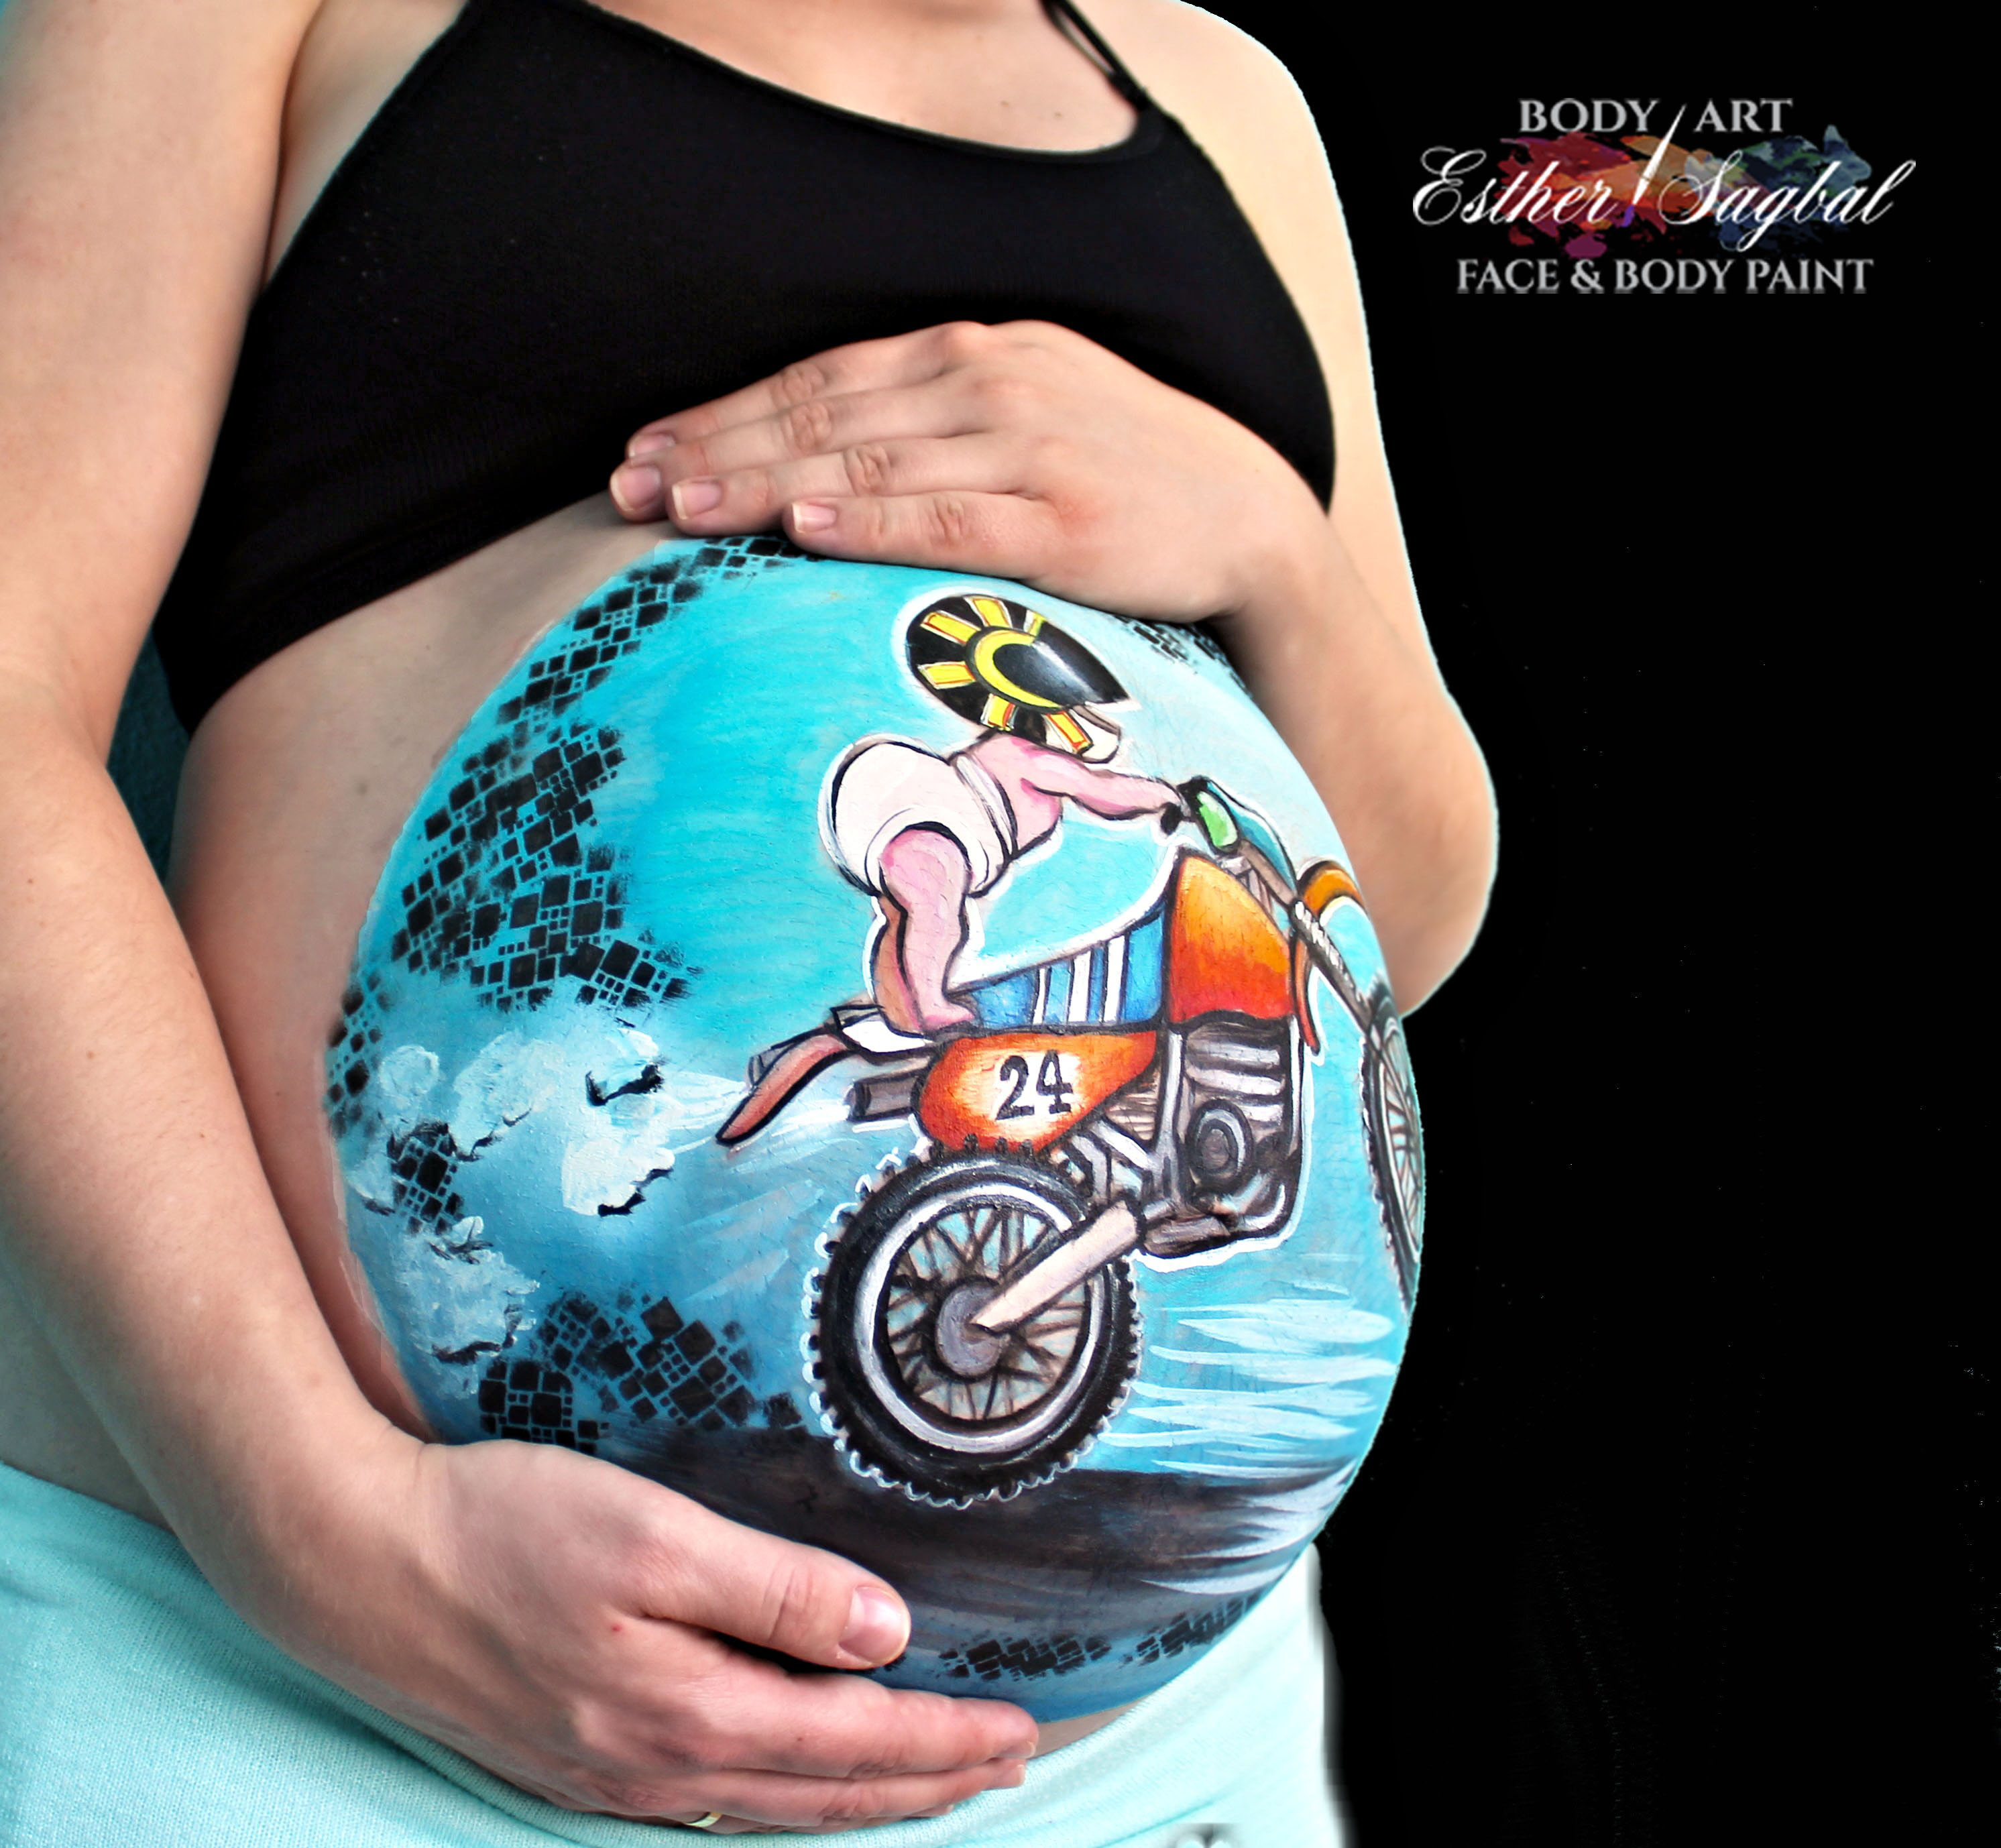 Ideas para pintar barriga embarazada, pintura de embarazadas, elige tu  diseño!